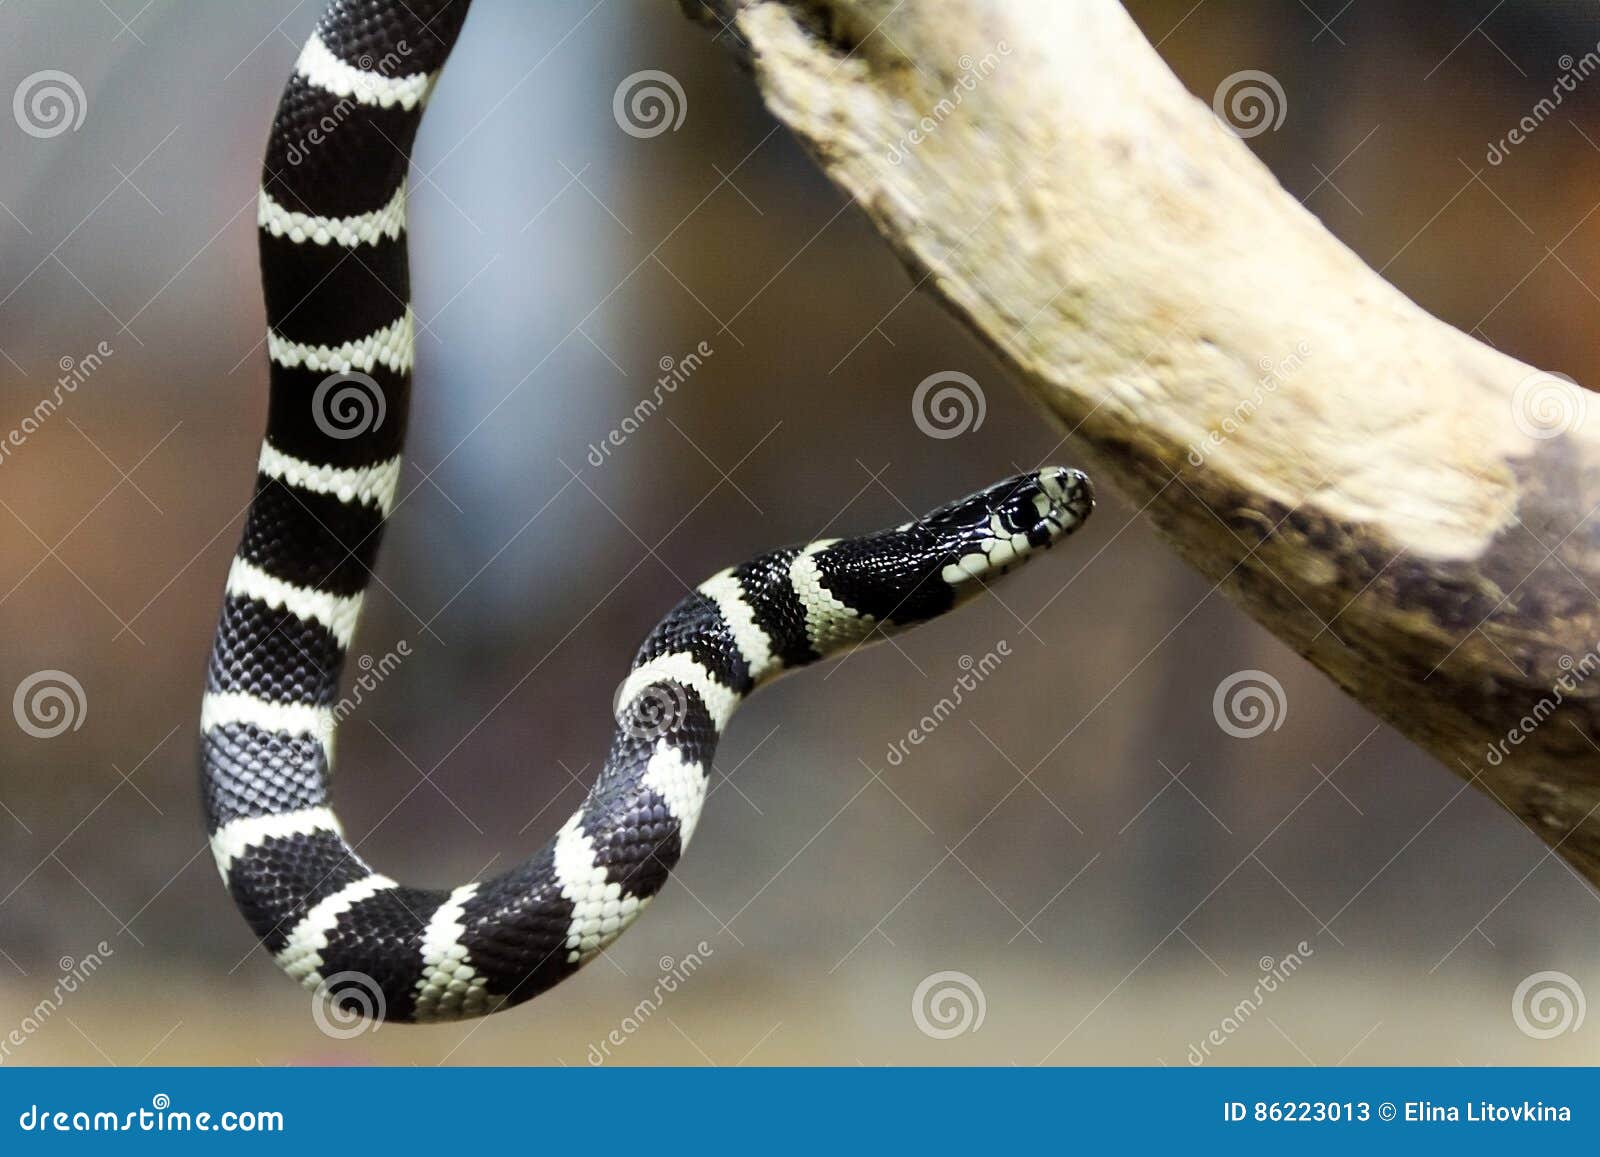 california king snake